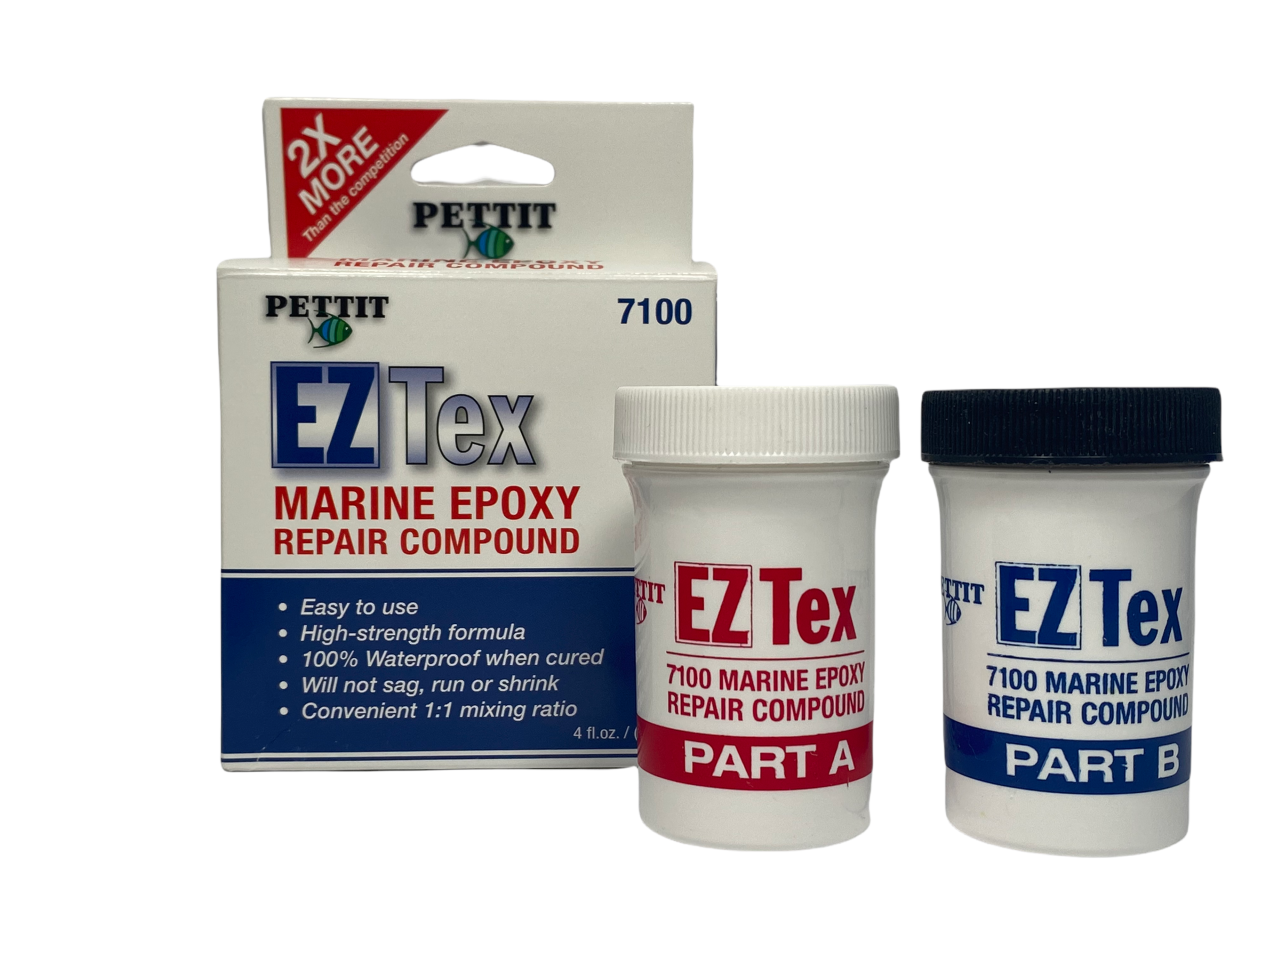 Marine Tex Epoxy Repair Kit 2 oz Gray